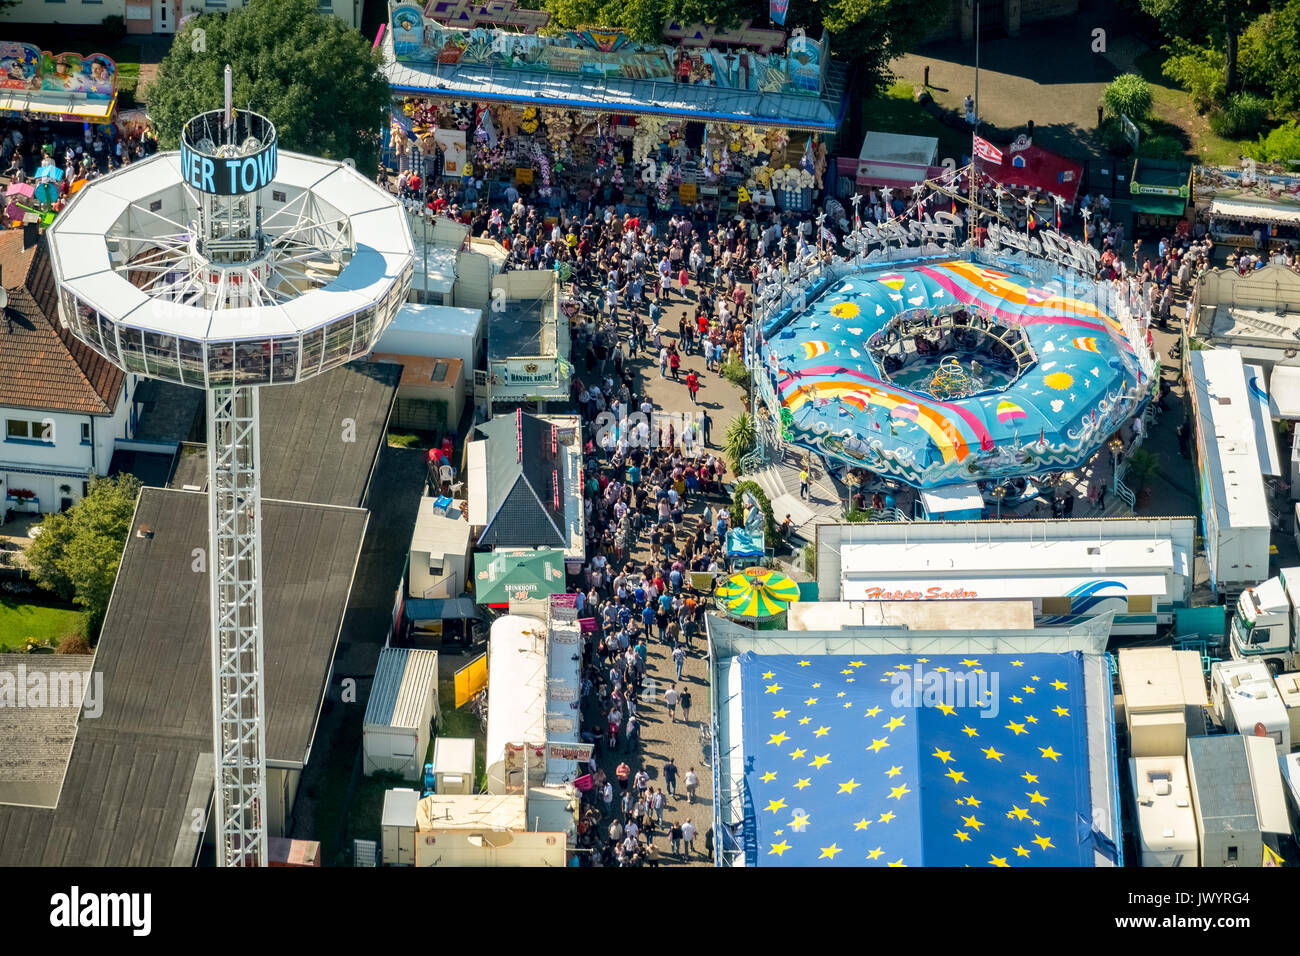 582. Cranger fair, fairground carousel, roller coaster, Ferris wheel, observation tower, rides, fair attractions, festival, audience chains karussel,  Stock Photo